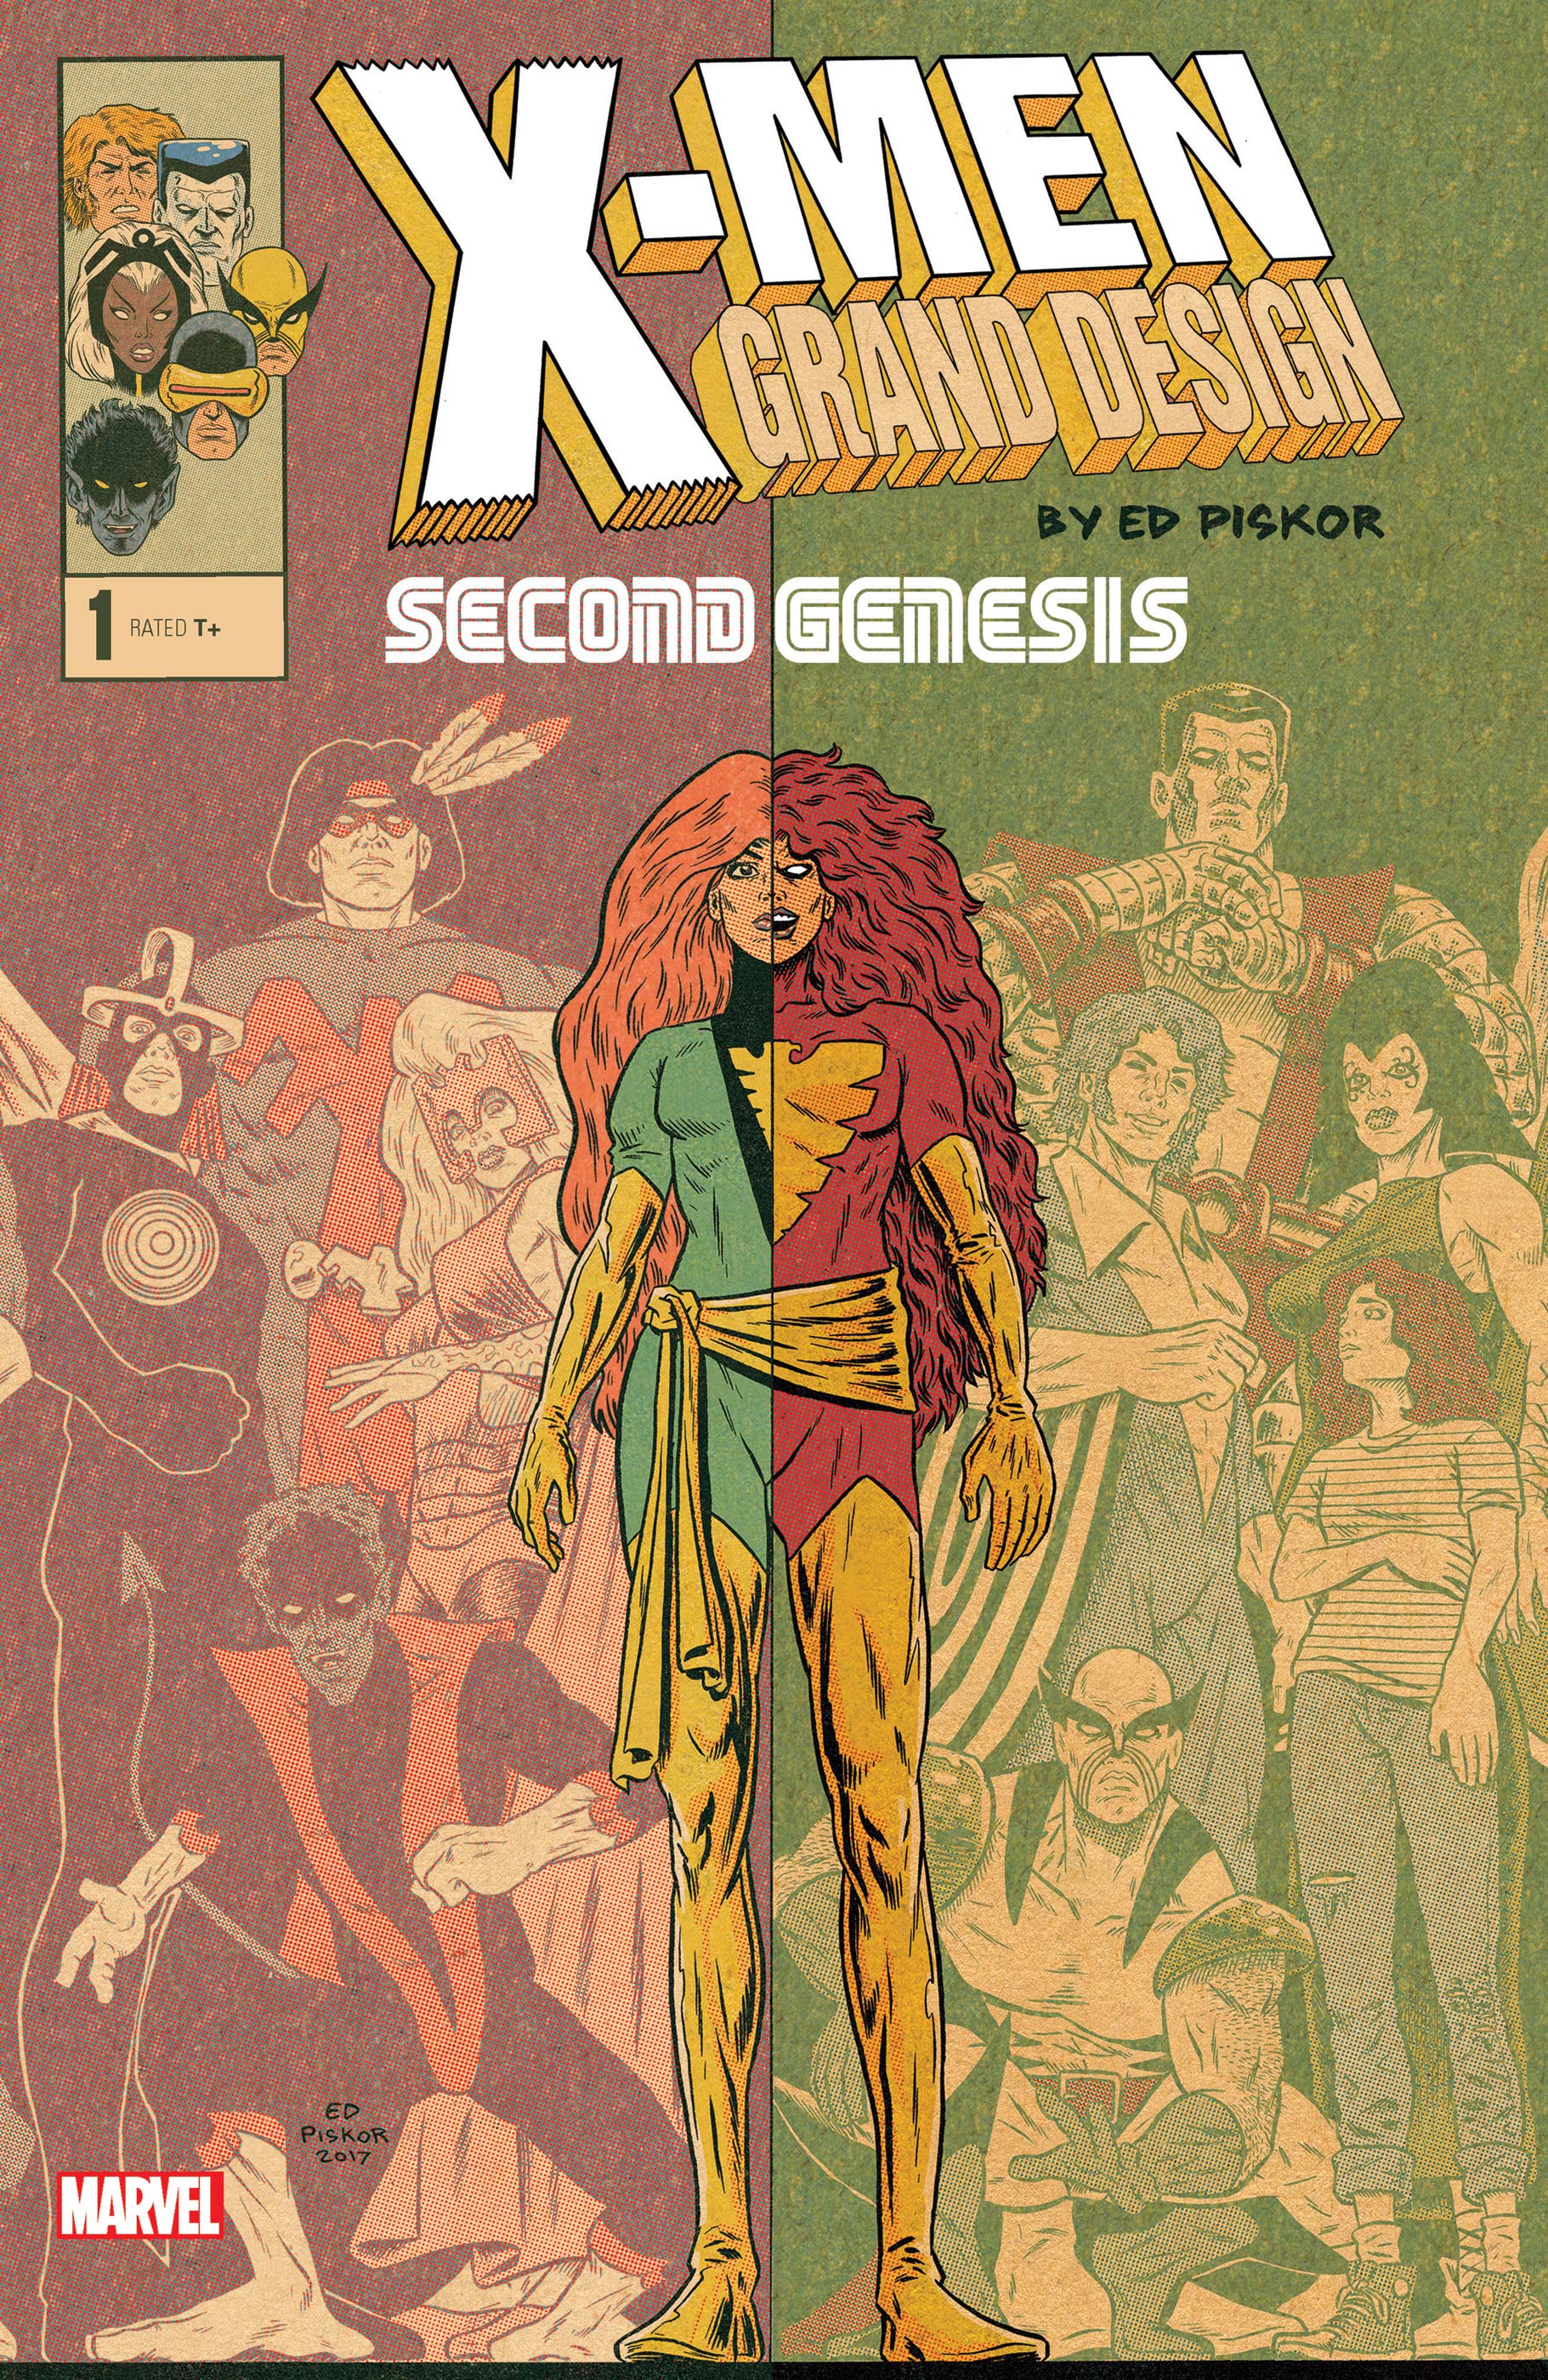 X-Men: Grand Design - Second Genesis (2018) #1